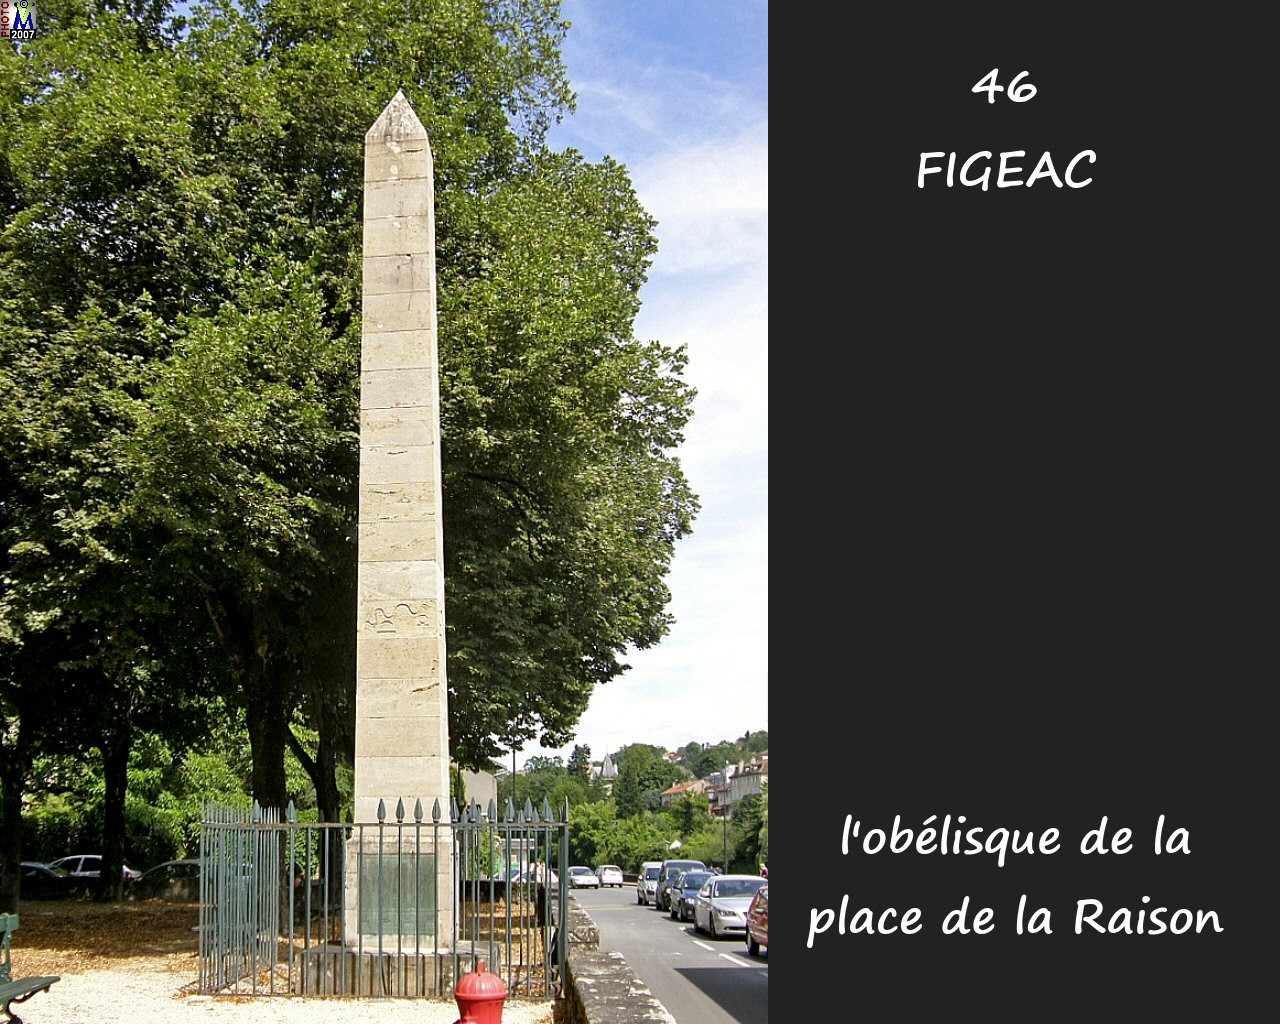 46FIGEAC_obelisque_100.jpg